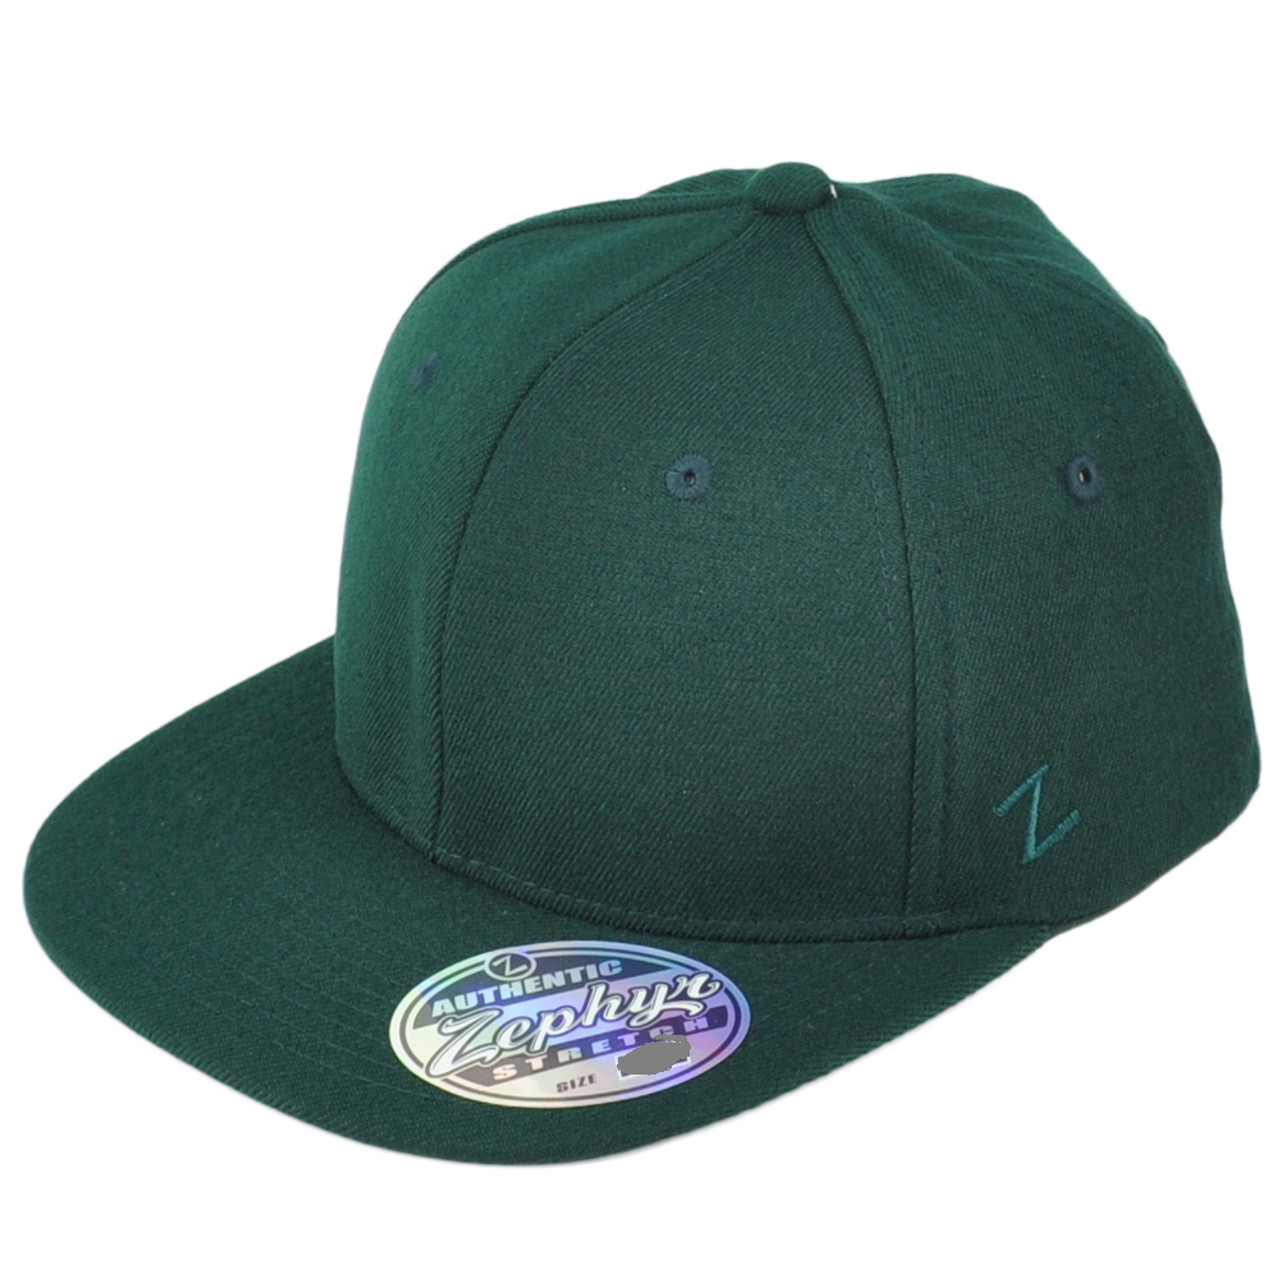 Zephyr Dark Forest Hat Cap Medium/Large Stretch Green Blank Fit Flat Store Flex - Bill Cap